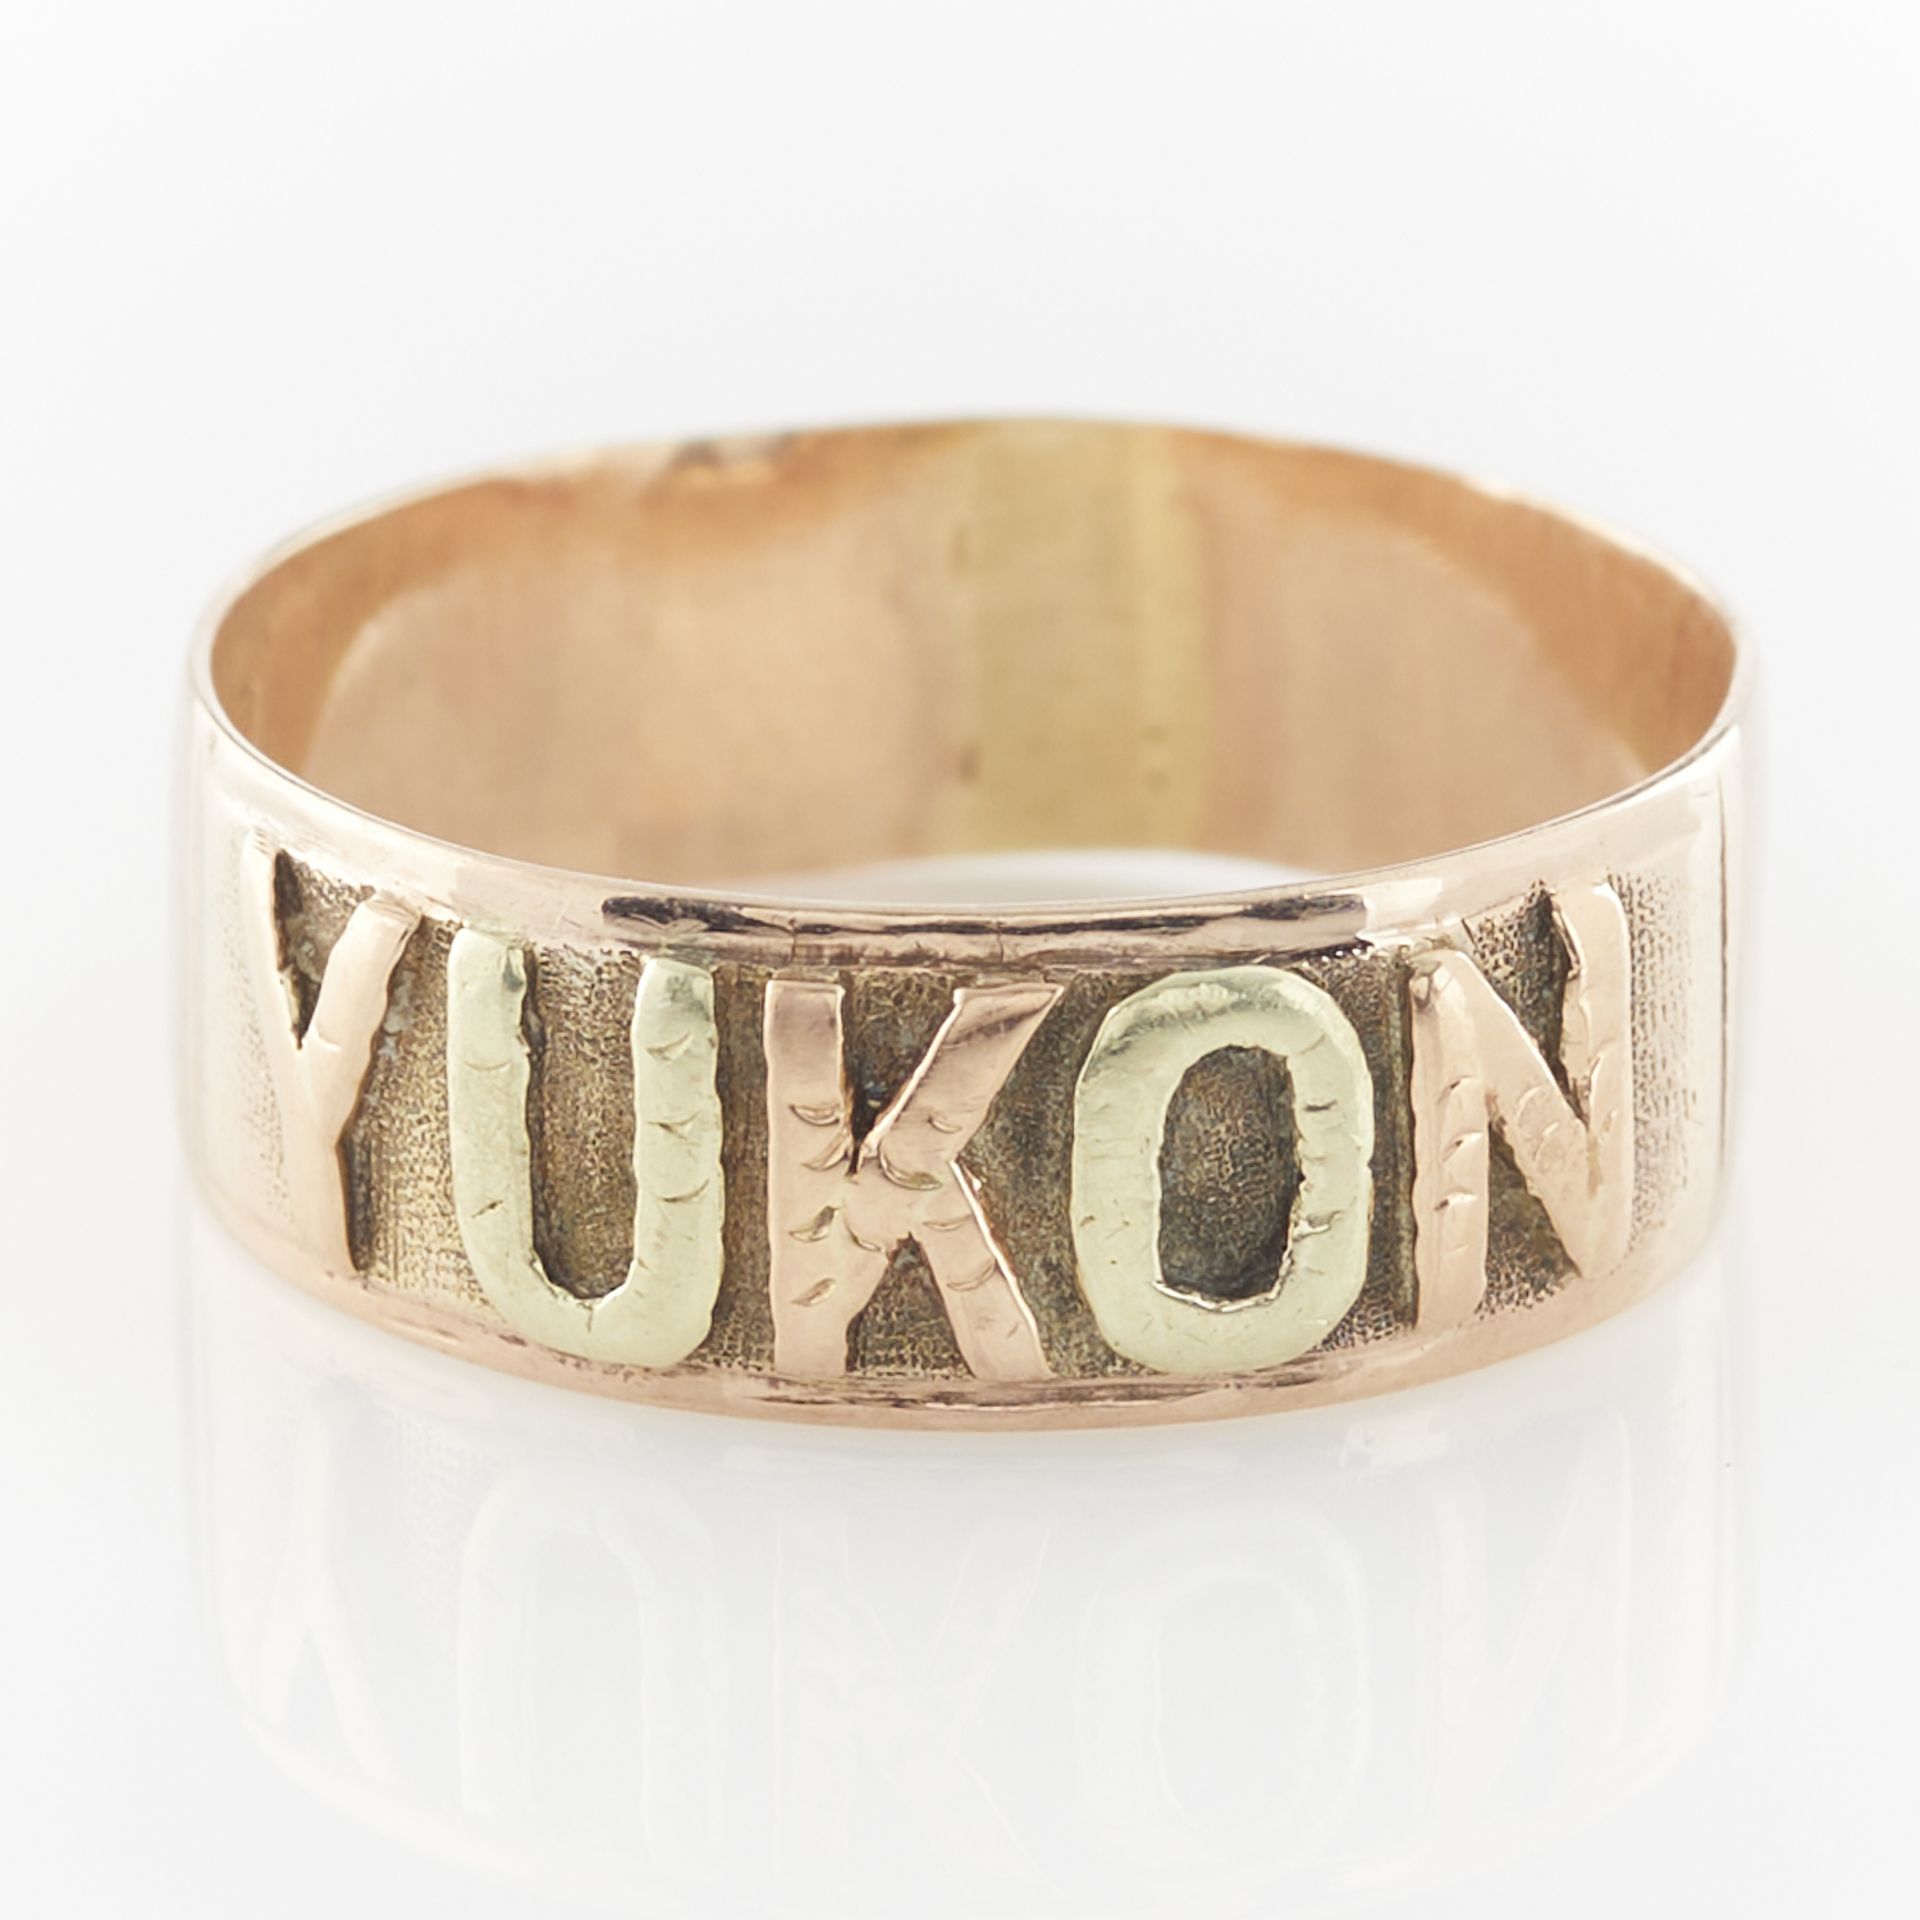 Grant & Co. Yukon Ring - Image 7 of 7